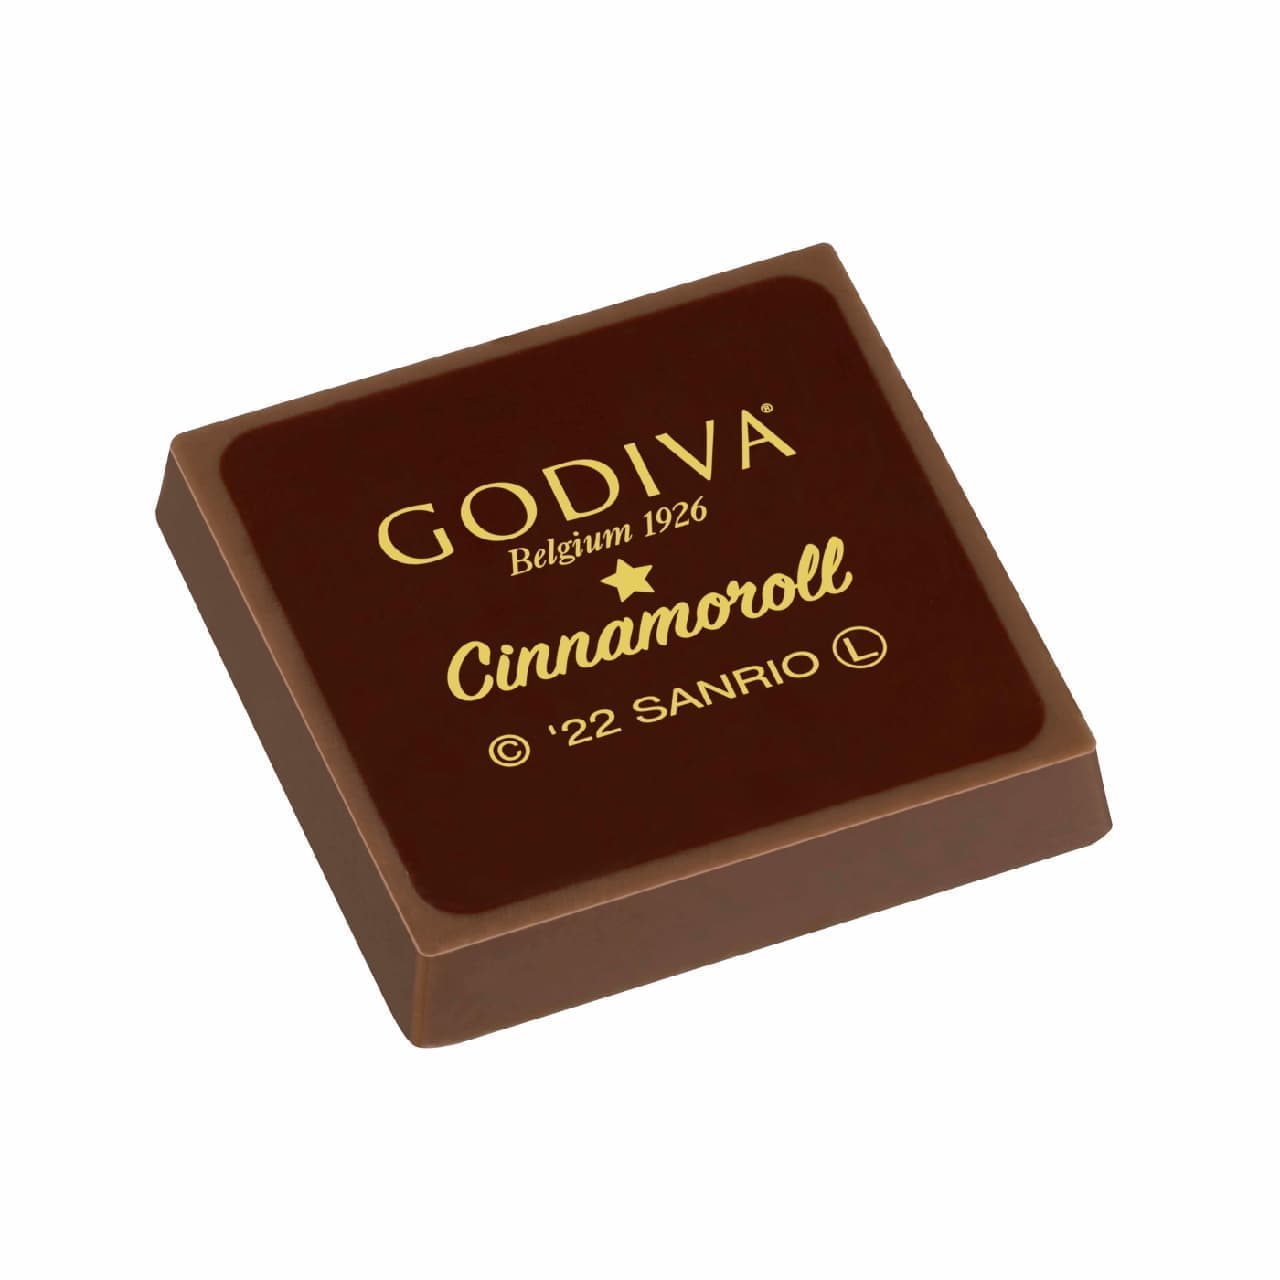 Godiva and Cinnamoroll collaborate on "Godiva Halloween Collection".